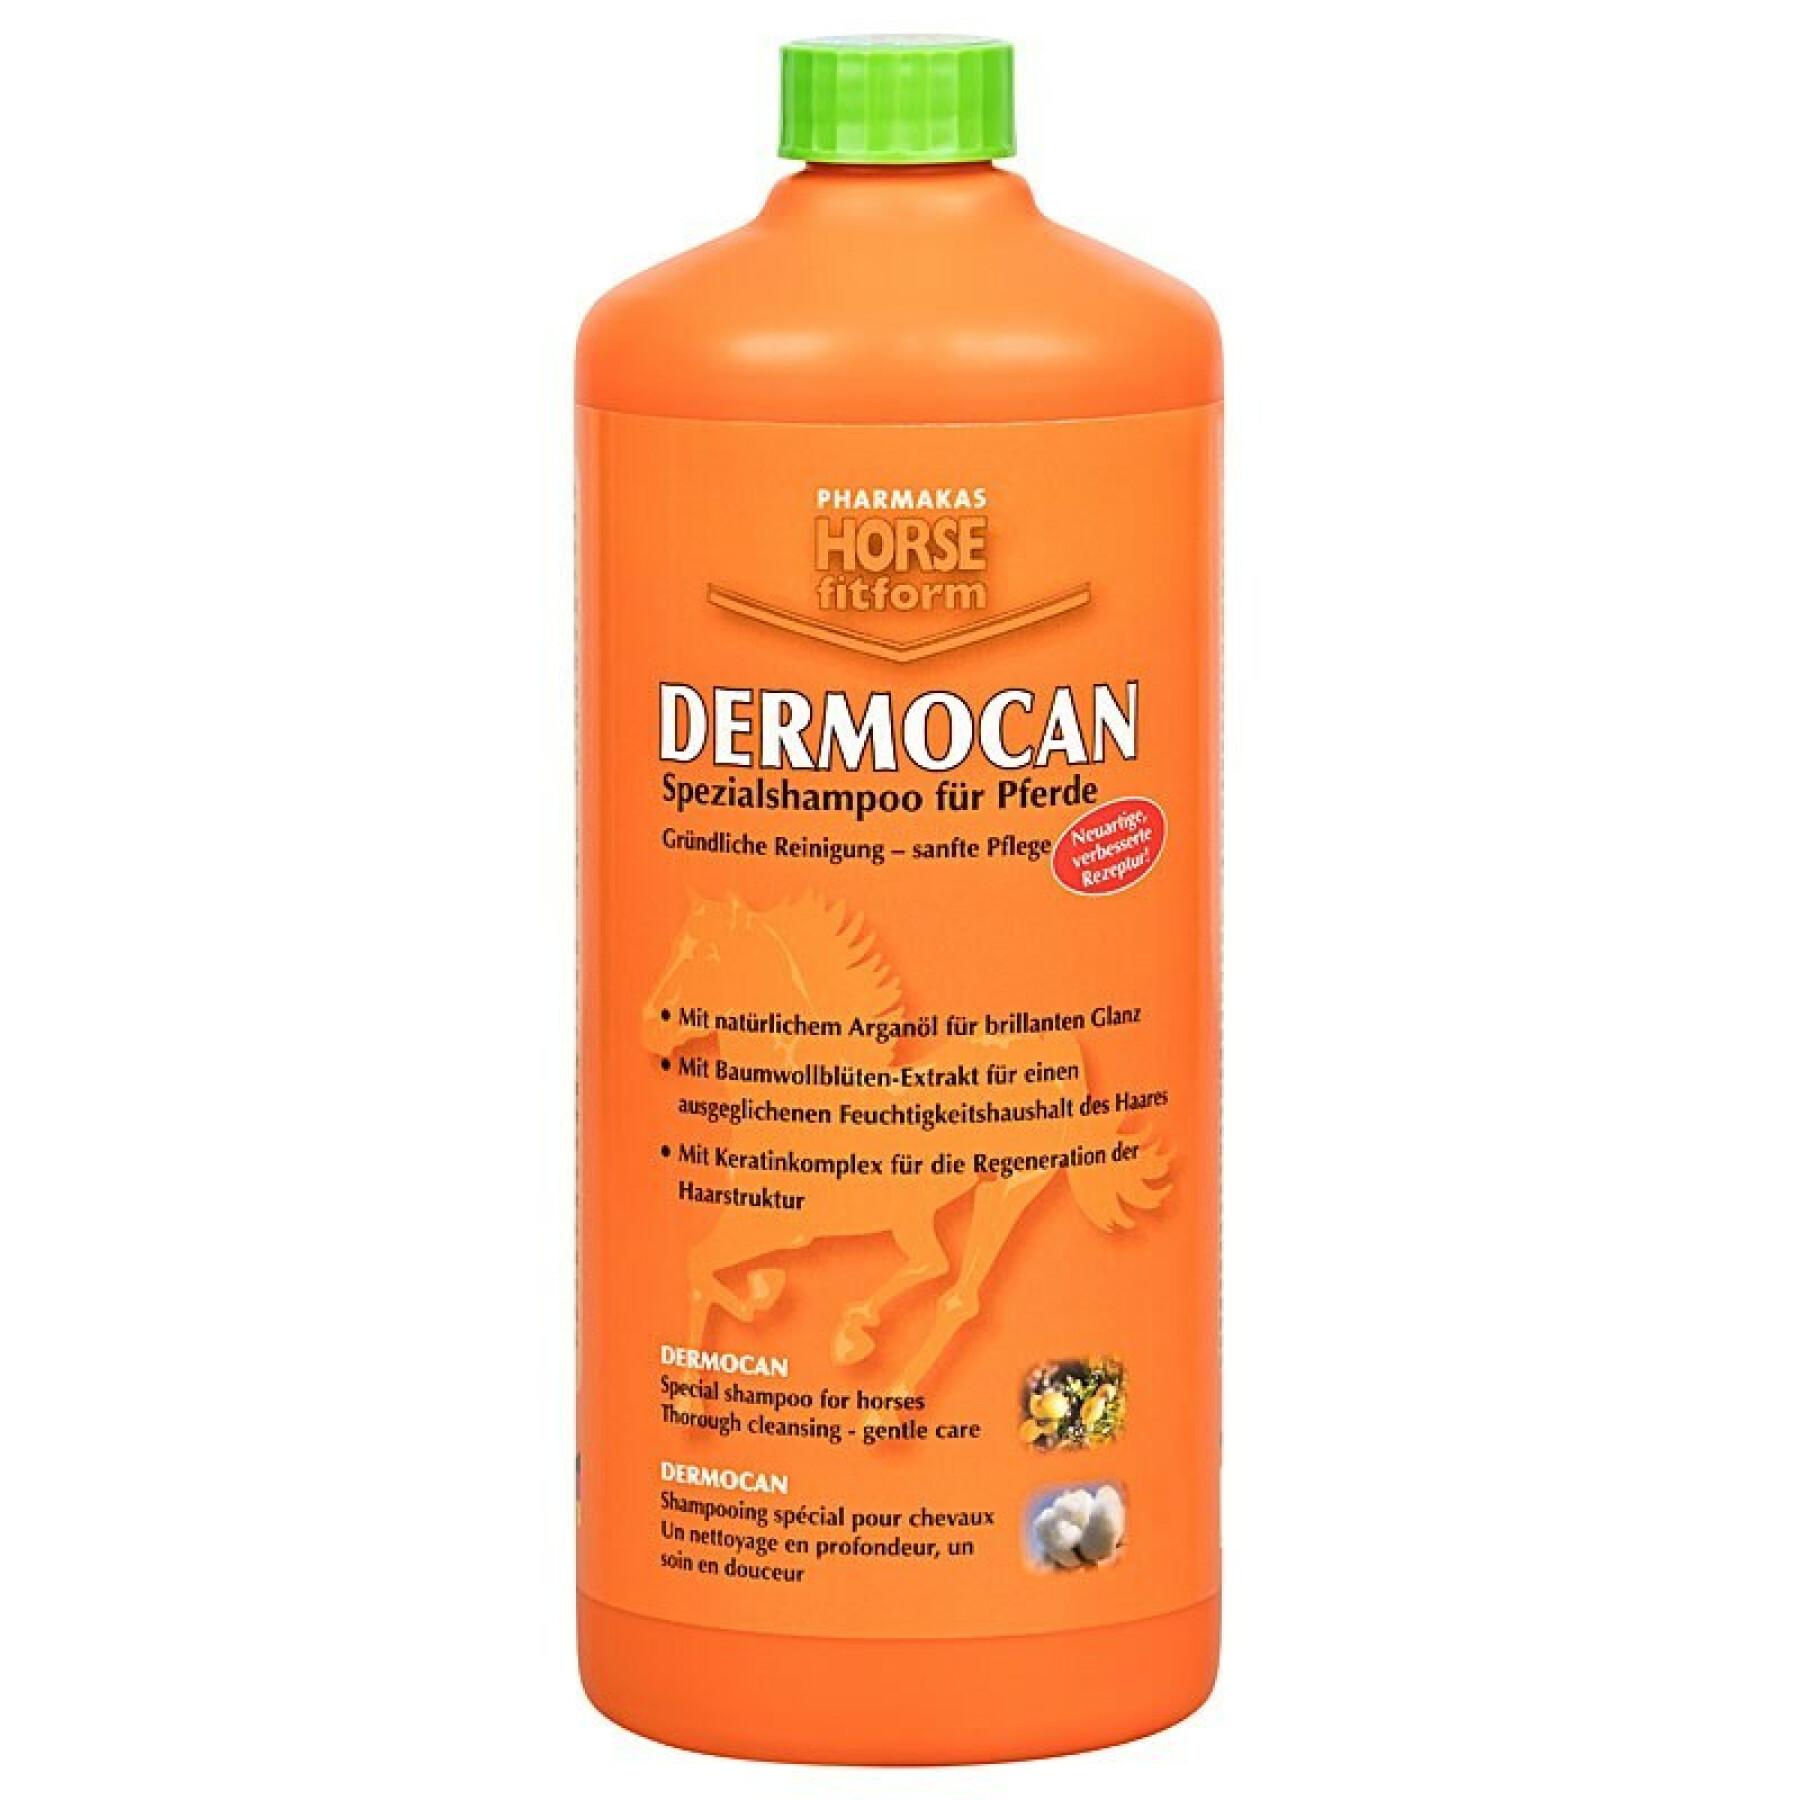 Horse shampoo Pharmaka Dermocan 2,5l